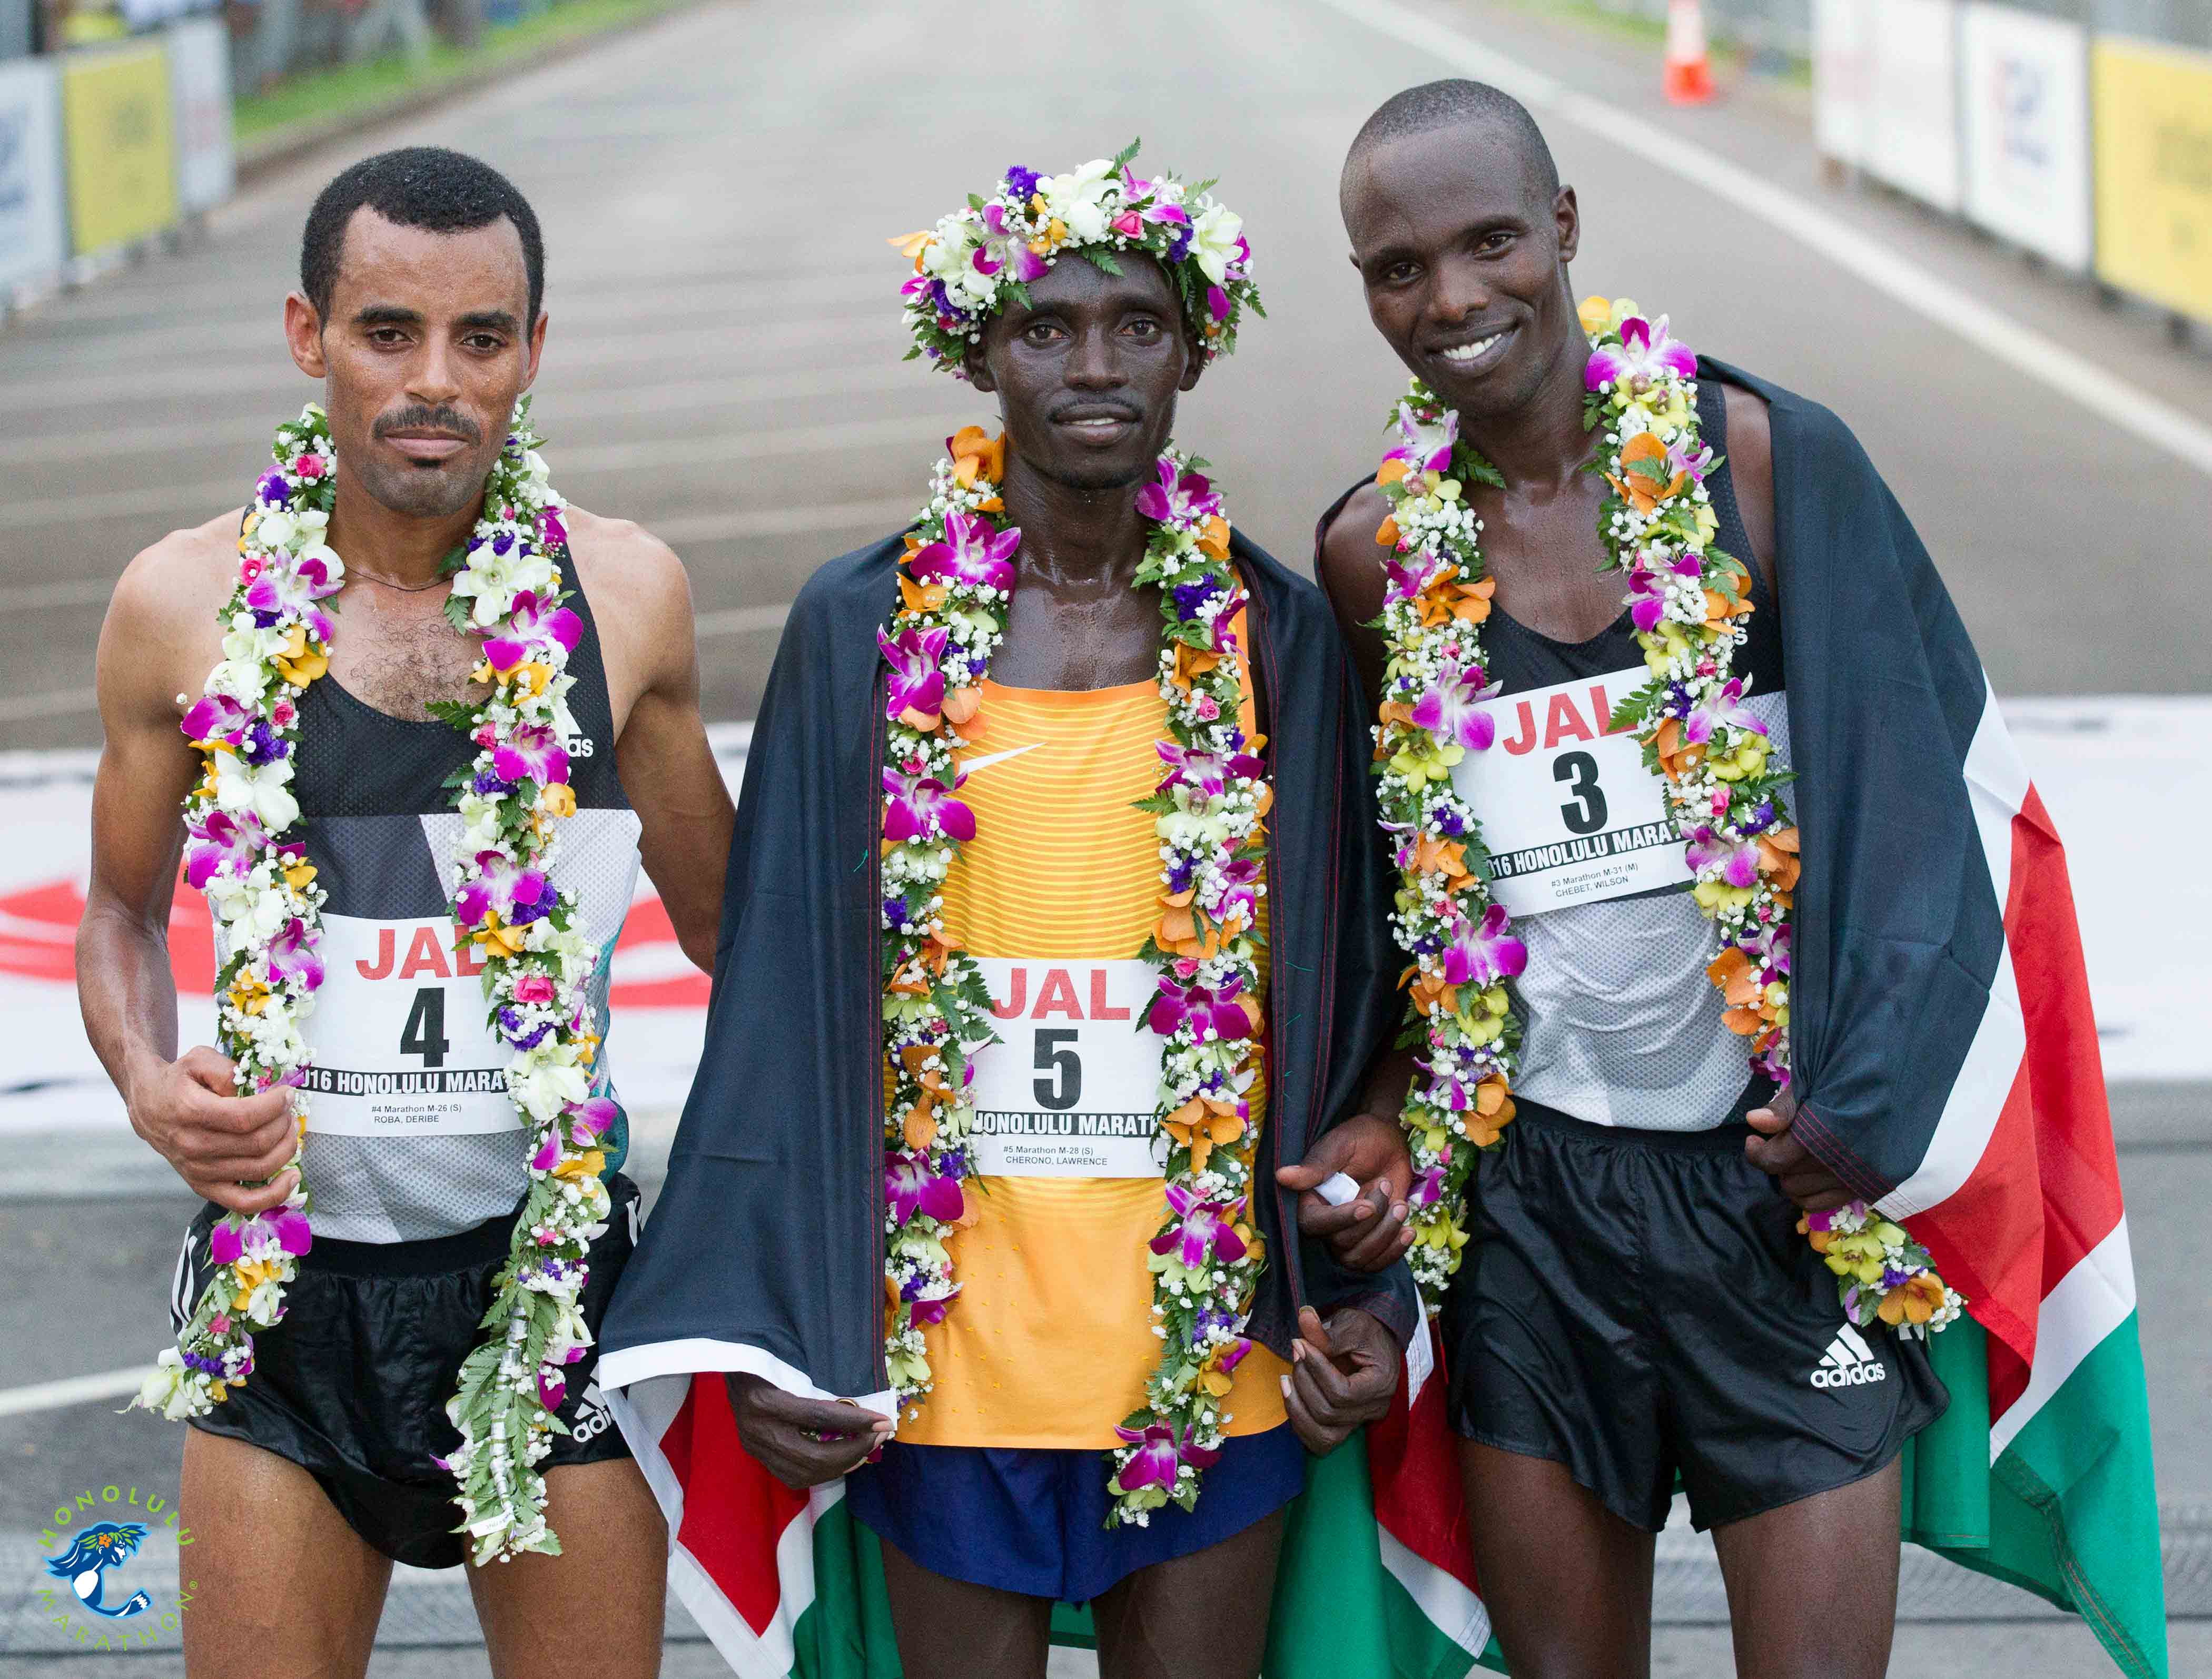 2017 Hapalua - Hawaii's Half Marathon : Honolulu Marathon